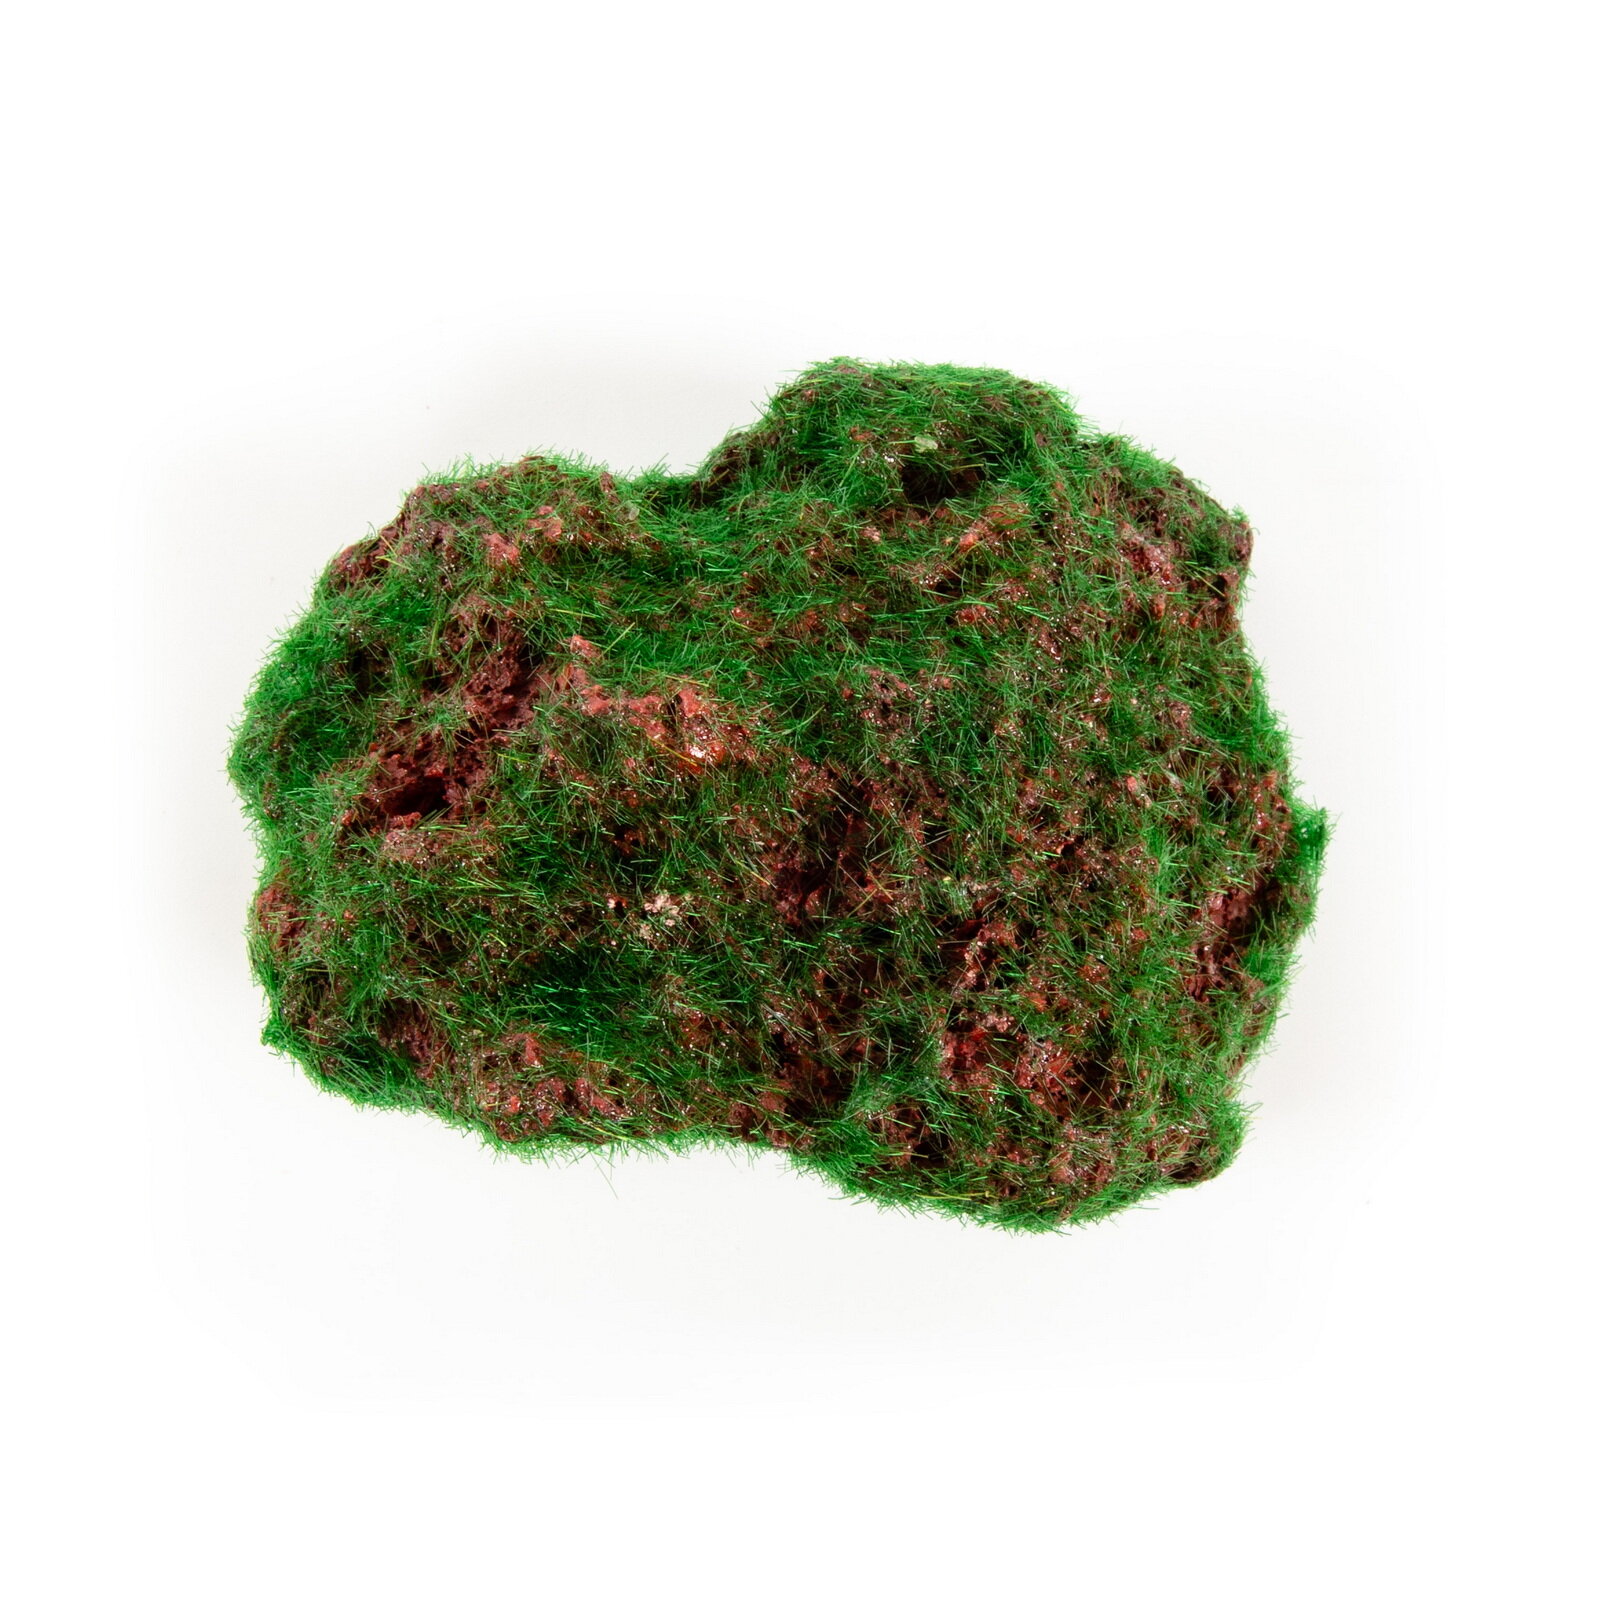 Декоративный камень с мхом для аквариума EXOPRIMA "Moss Stone", 9x6x5.5см